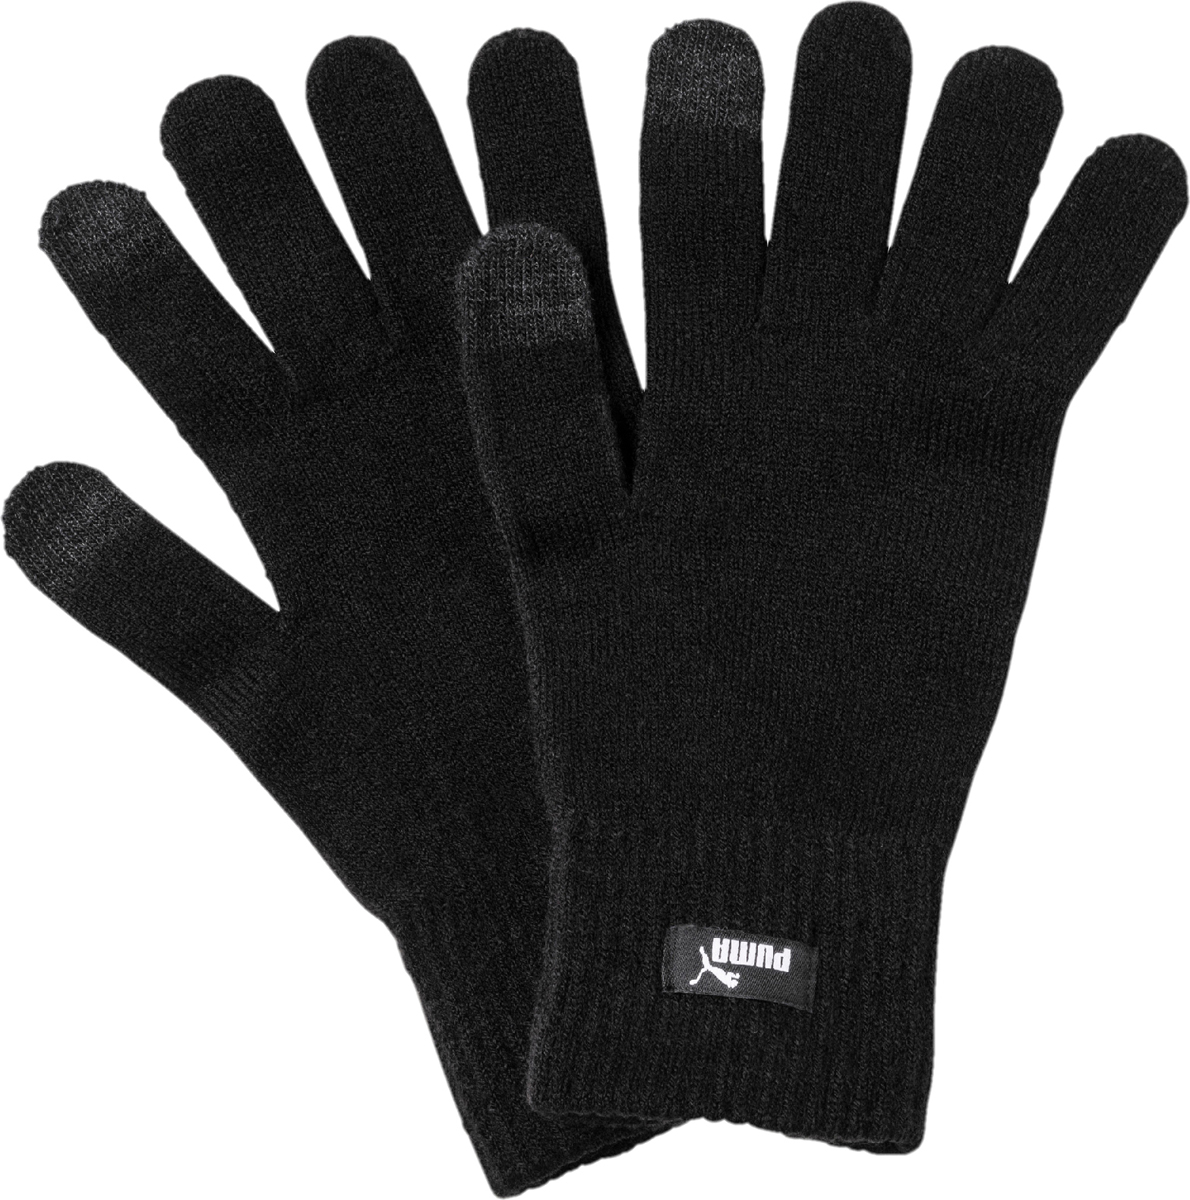 Перчатки Puma Knit Gloves, цвет: черный. 04131604. Размер M/L (8)